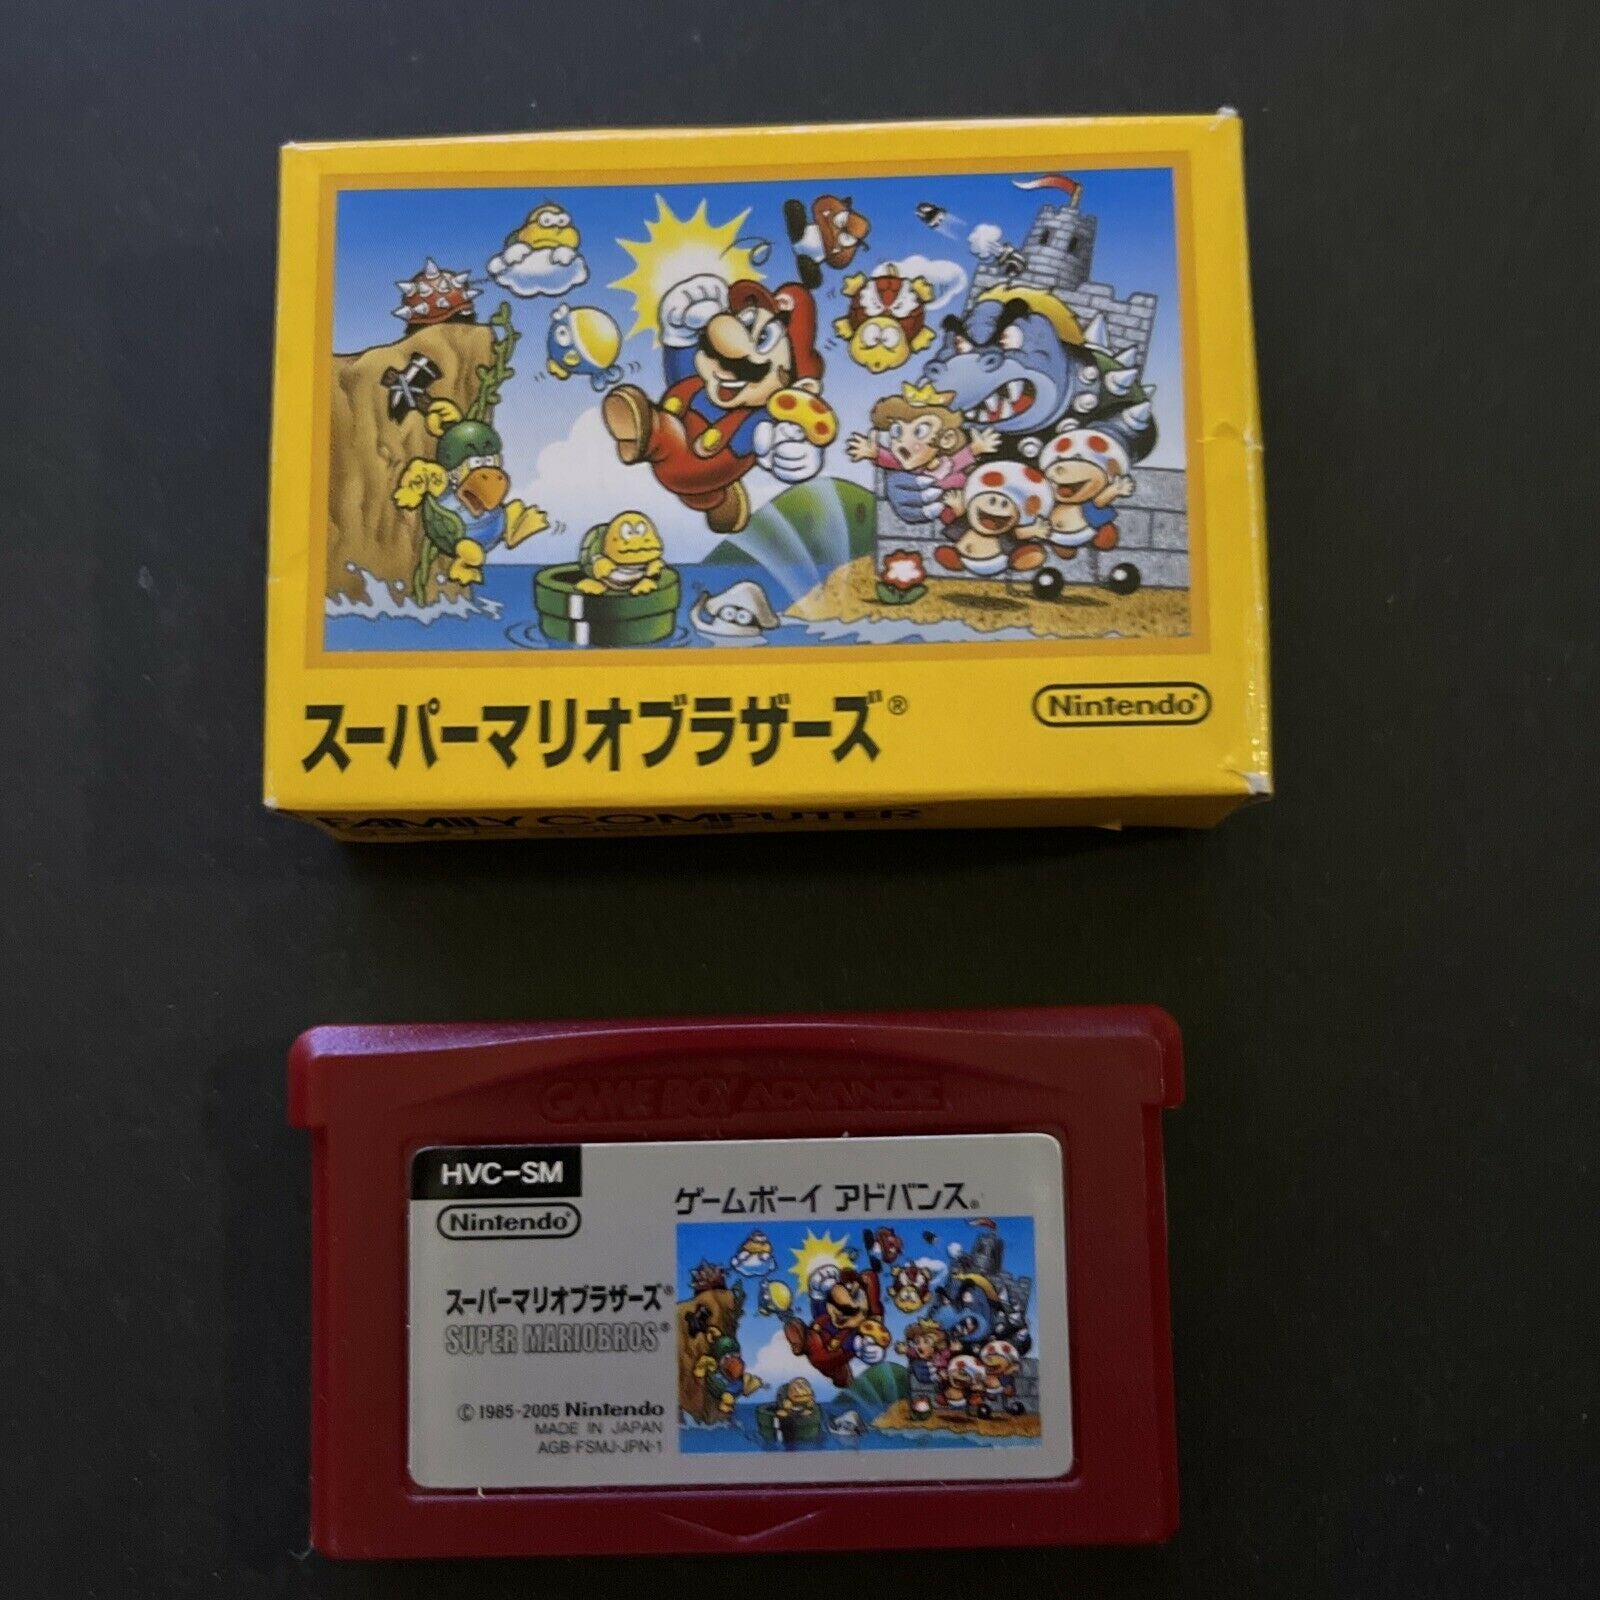 Super Mario Brothers 2 Famicom Mini Nintendo Game Boy Advance /Japan Import  [Game Boy Advance]